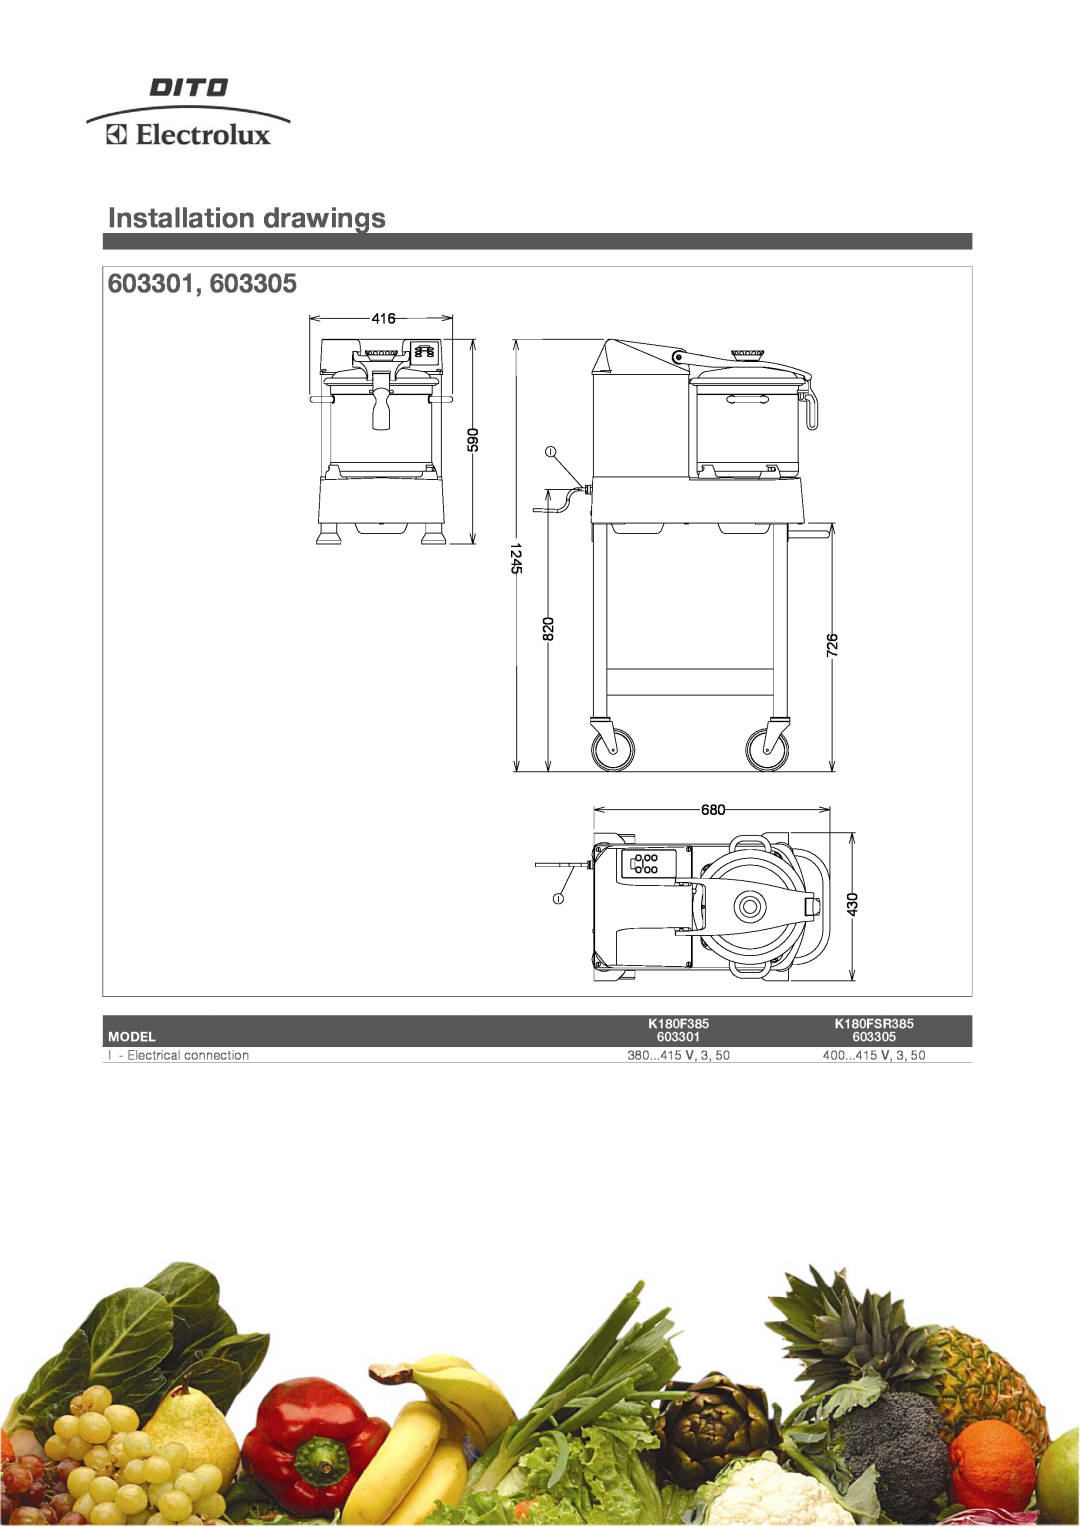 Electrolux K180F385 manual Installation drawings, 603301, 1245 820, 726 680 430, Model, K180FSR385, 603305, 380...415 V, 3 